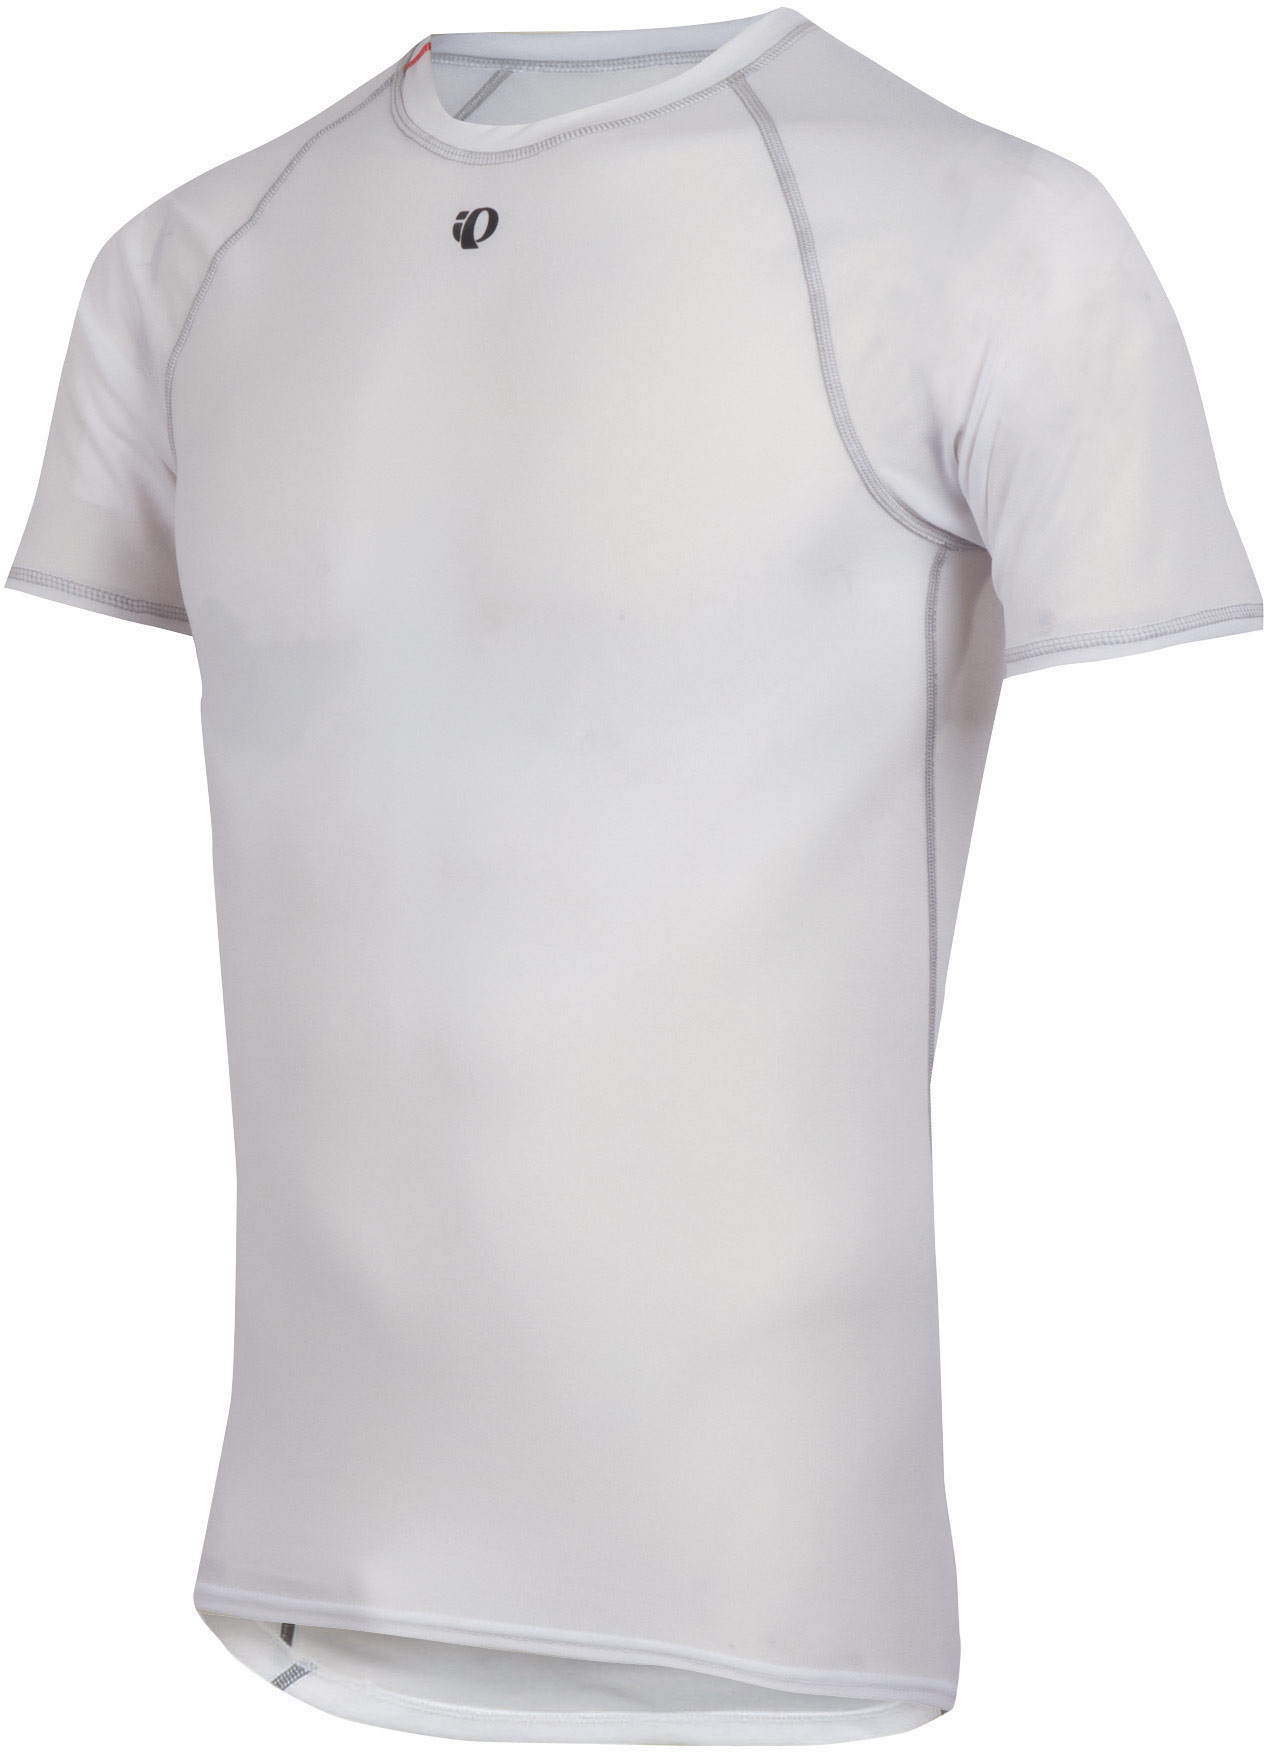 PEARL IZUMI Baselayer Transfer Short Sleeve White Size XXL (14121101508XXL)